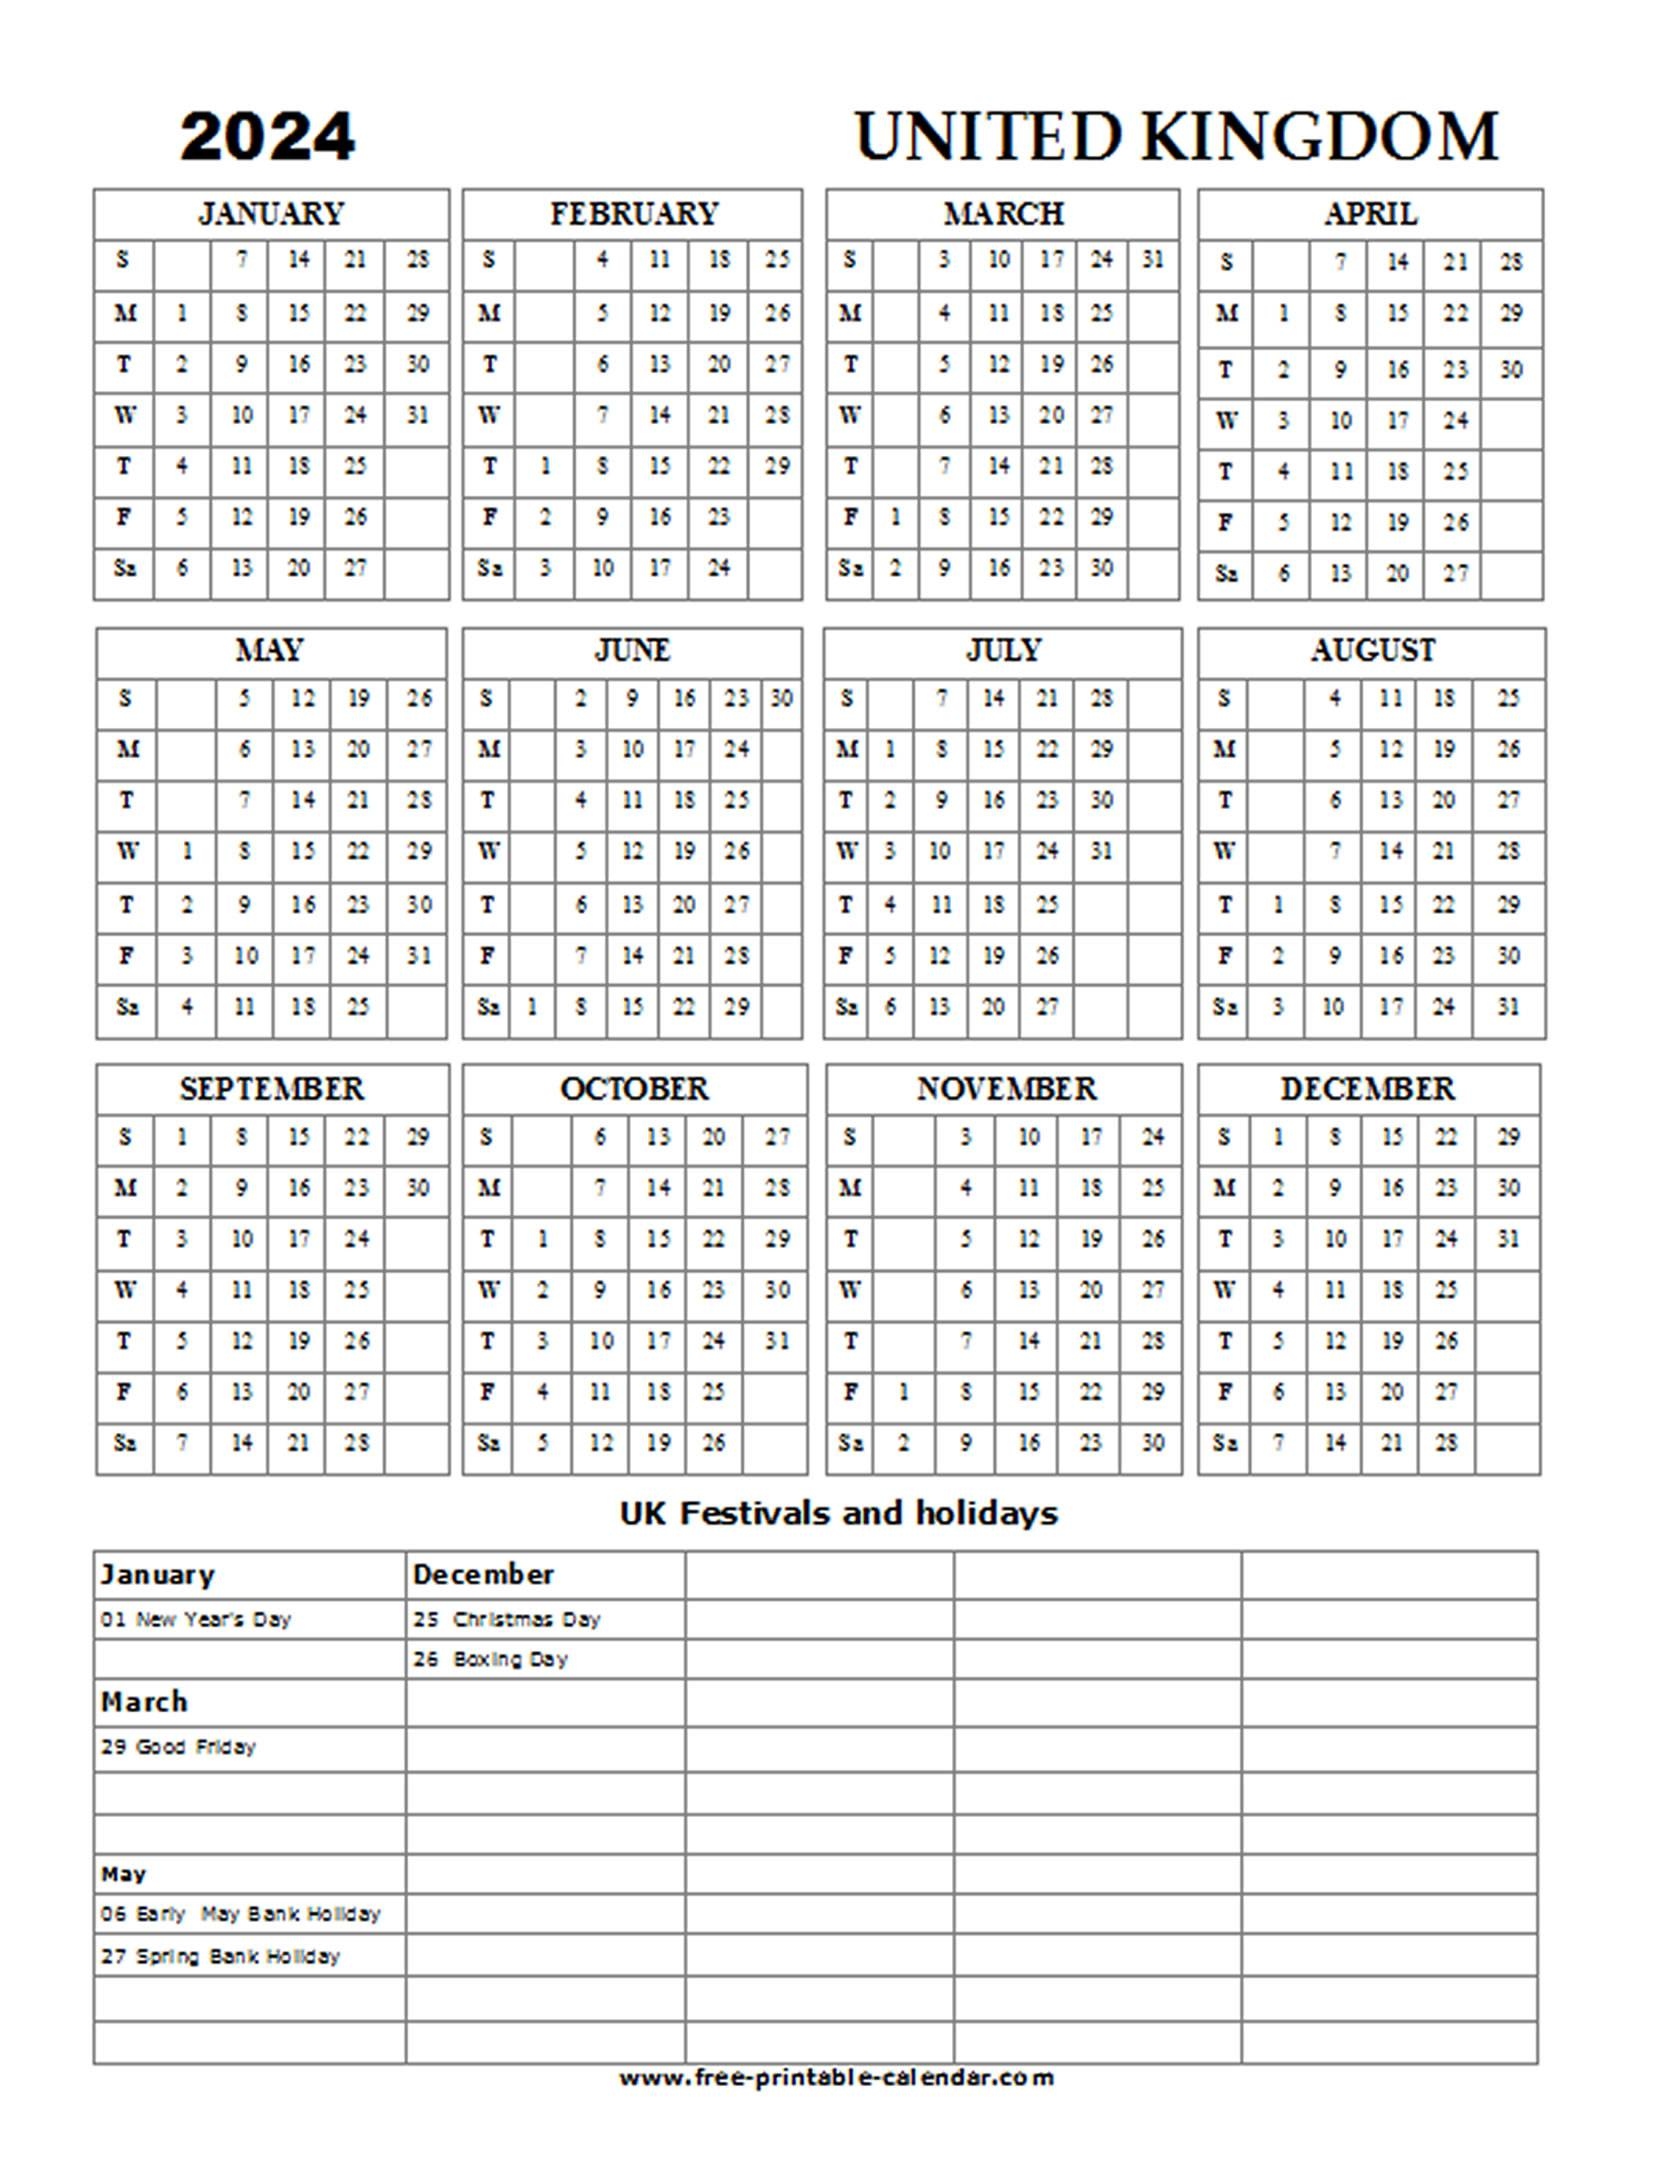 2024 Uk Holiday Calendar - Free-Printable-Calendar within Free Printable Calendar 2024 With Holidays Uk